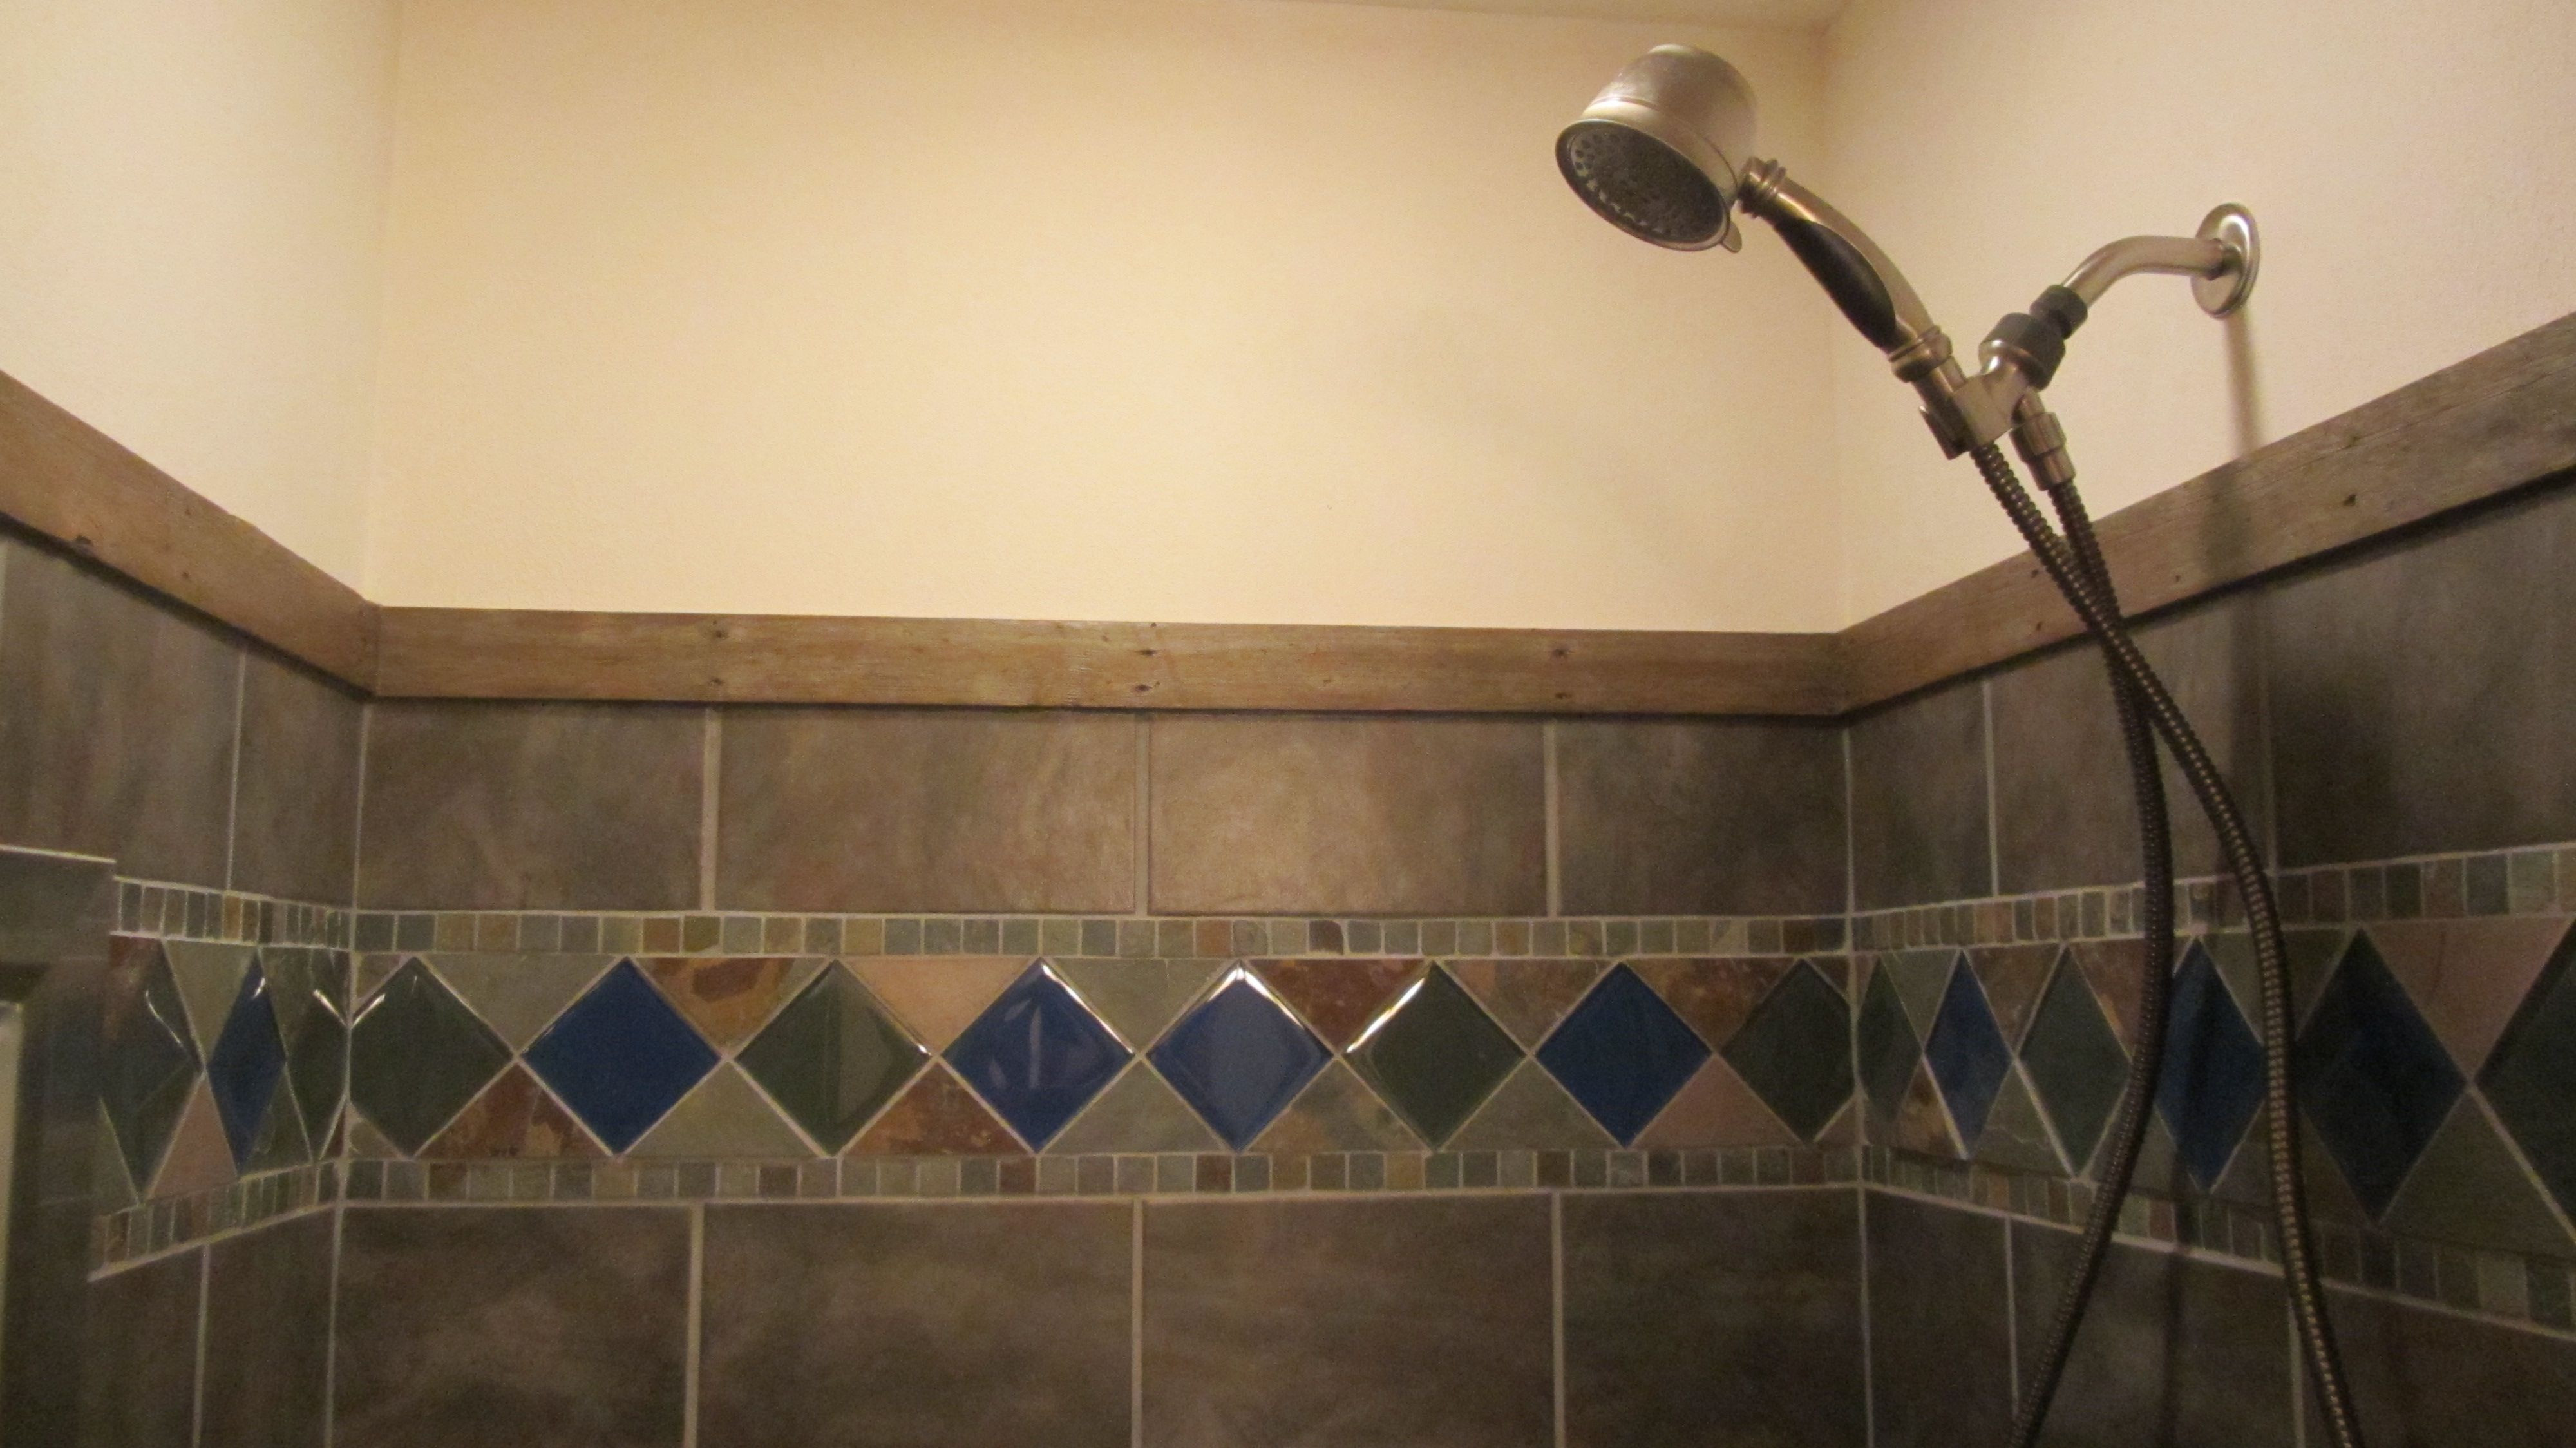 Best ideas about DIY Tile Shower
. Save or Pin DIY Shower Tile Now.